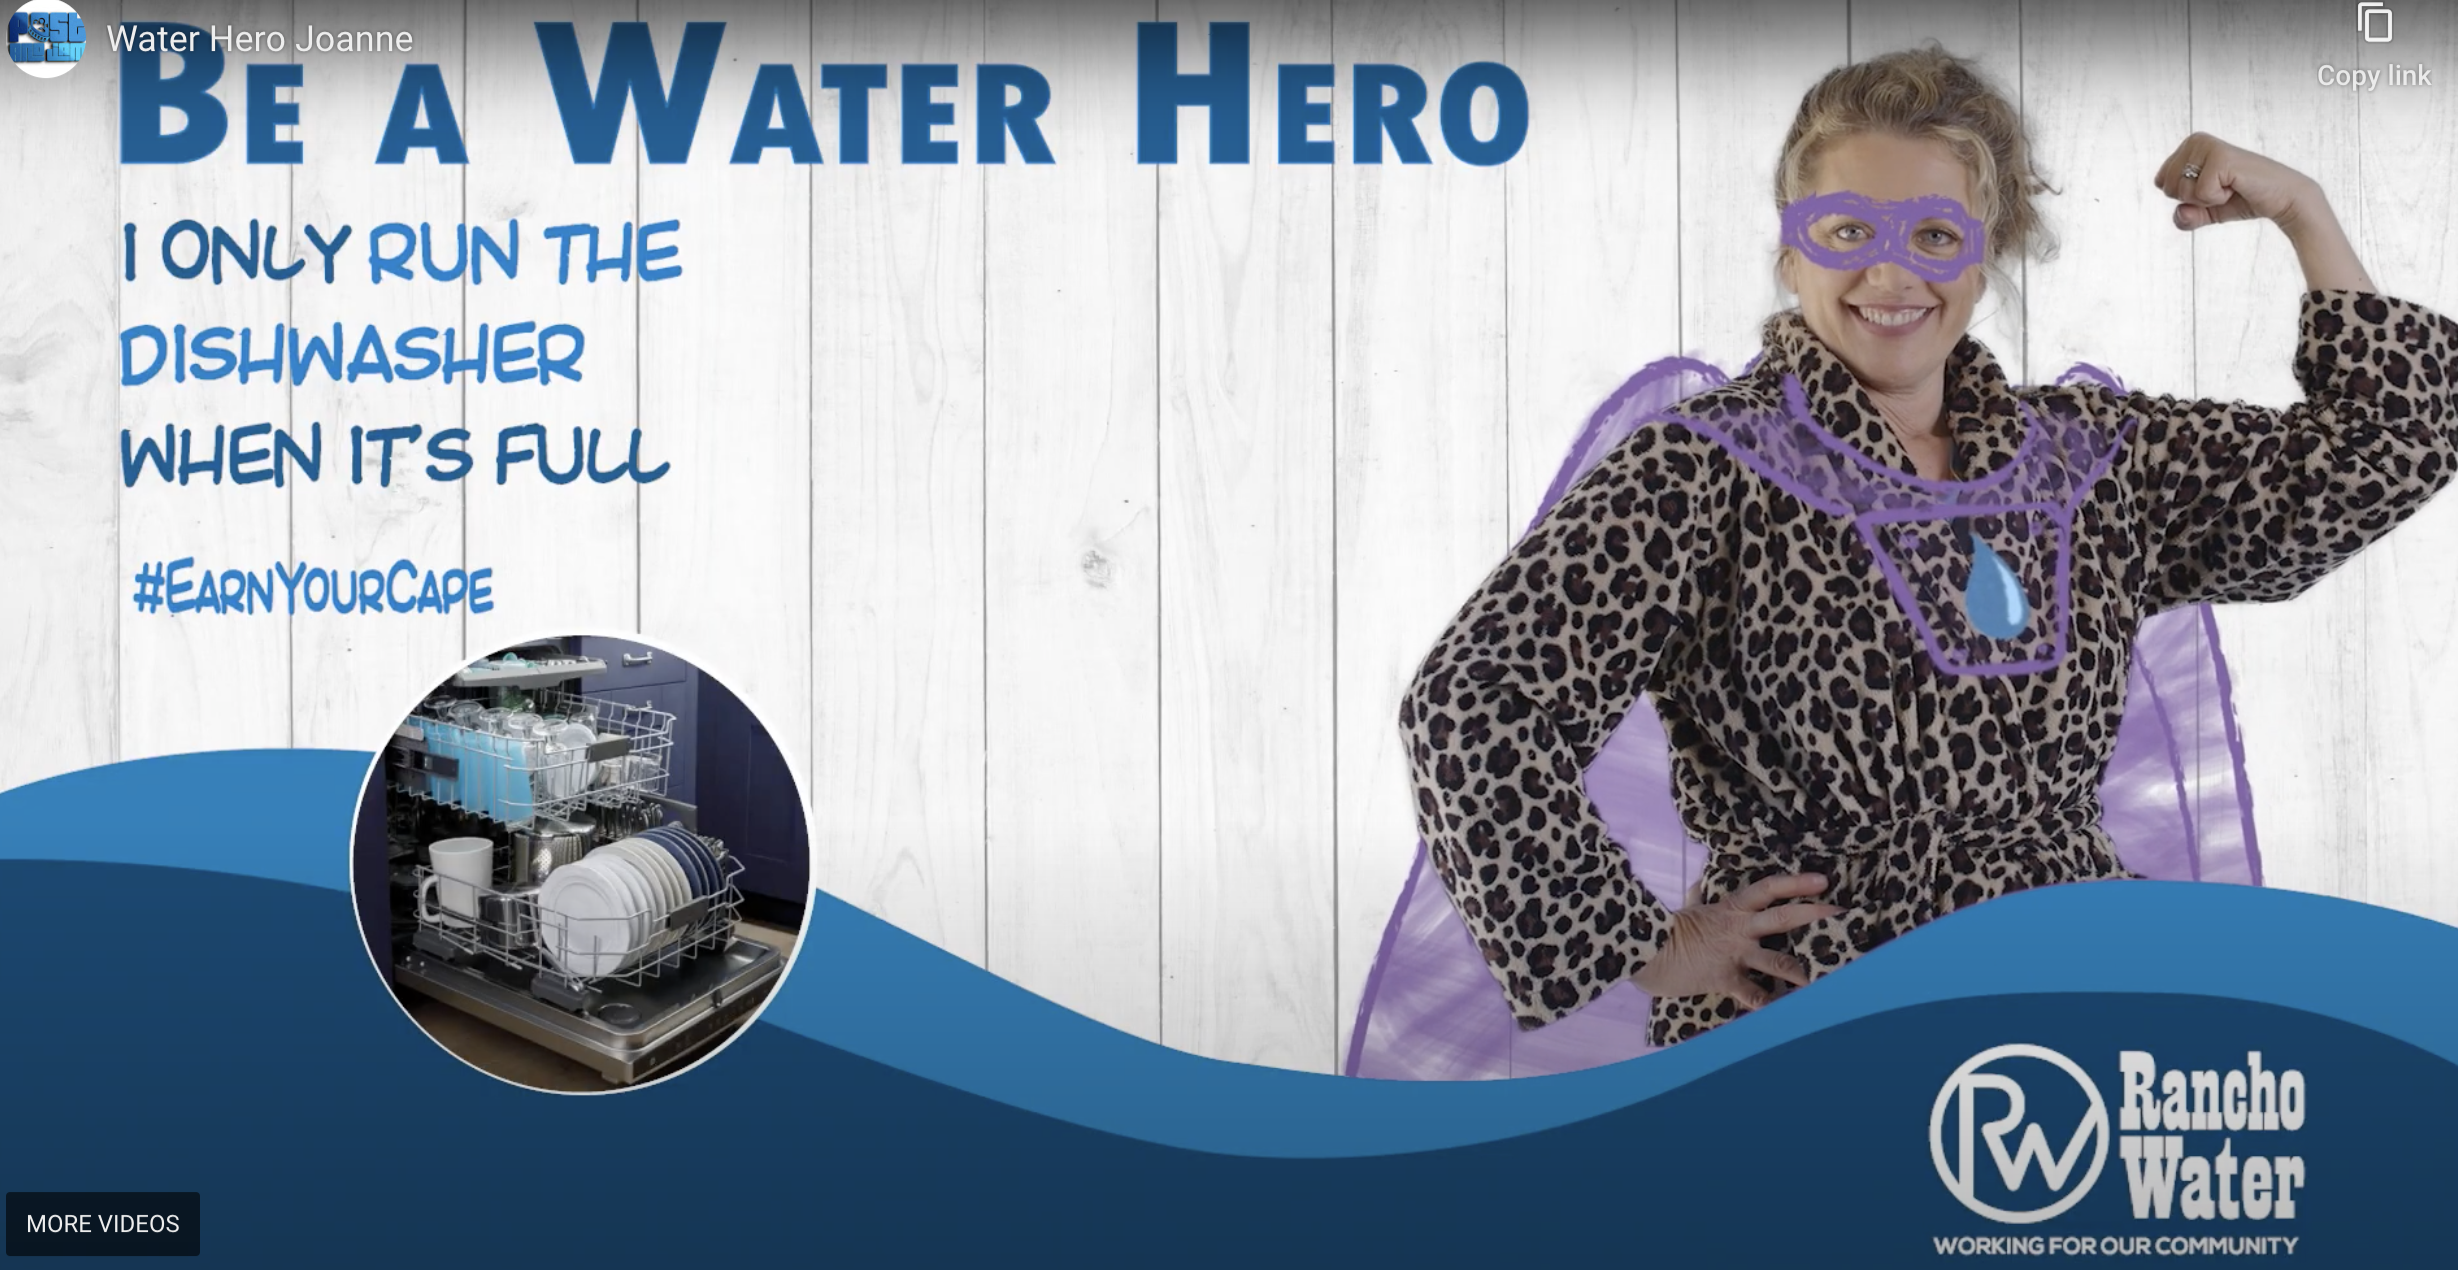 RCWD Water hero Joanne